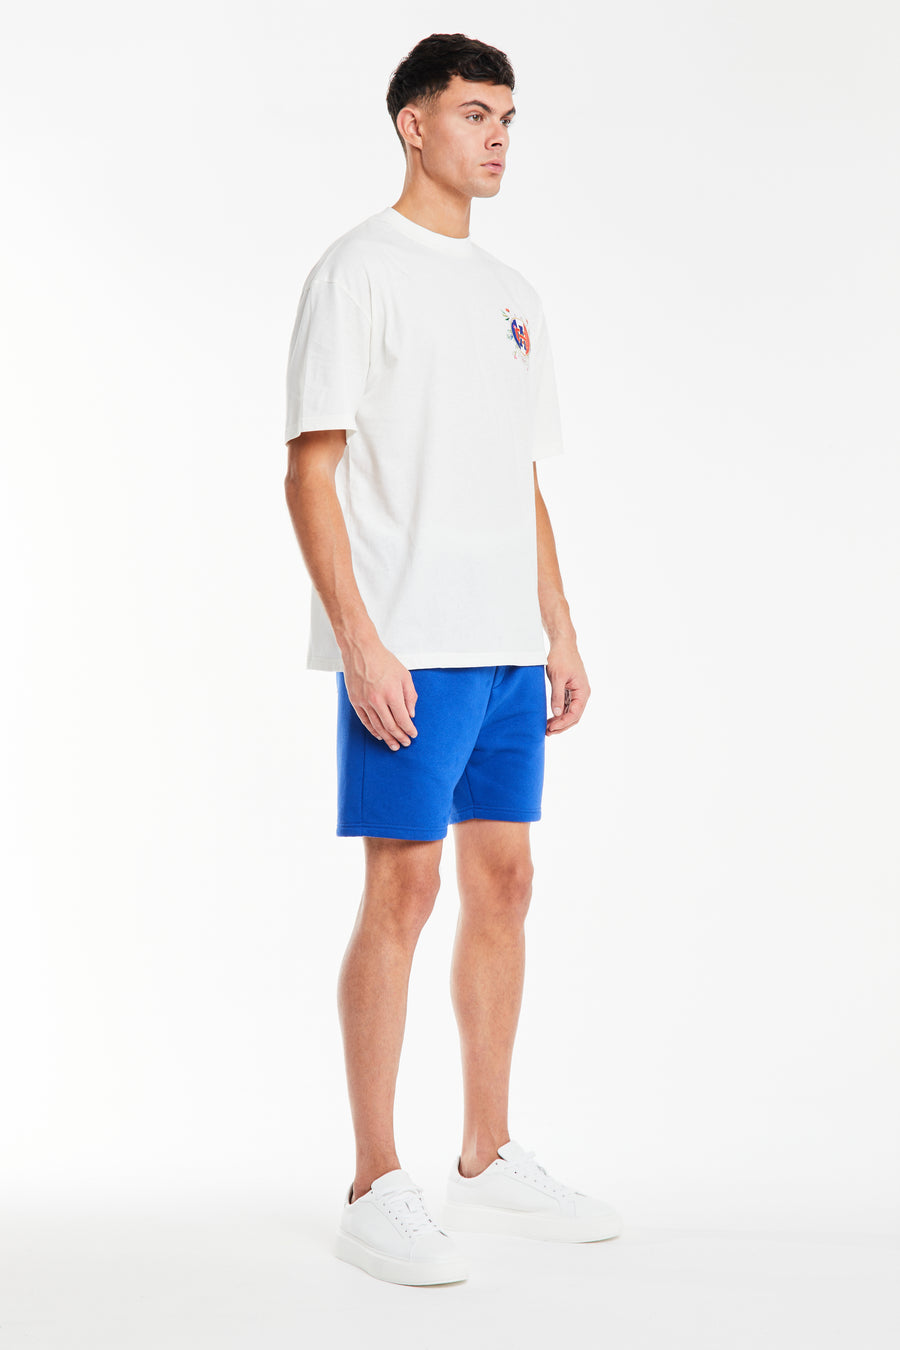 royal blue men's jersey shorts in sale